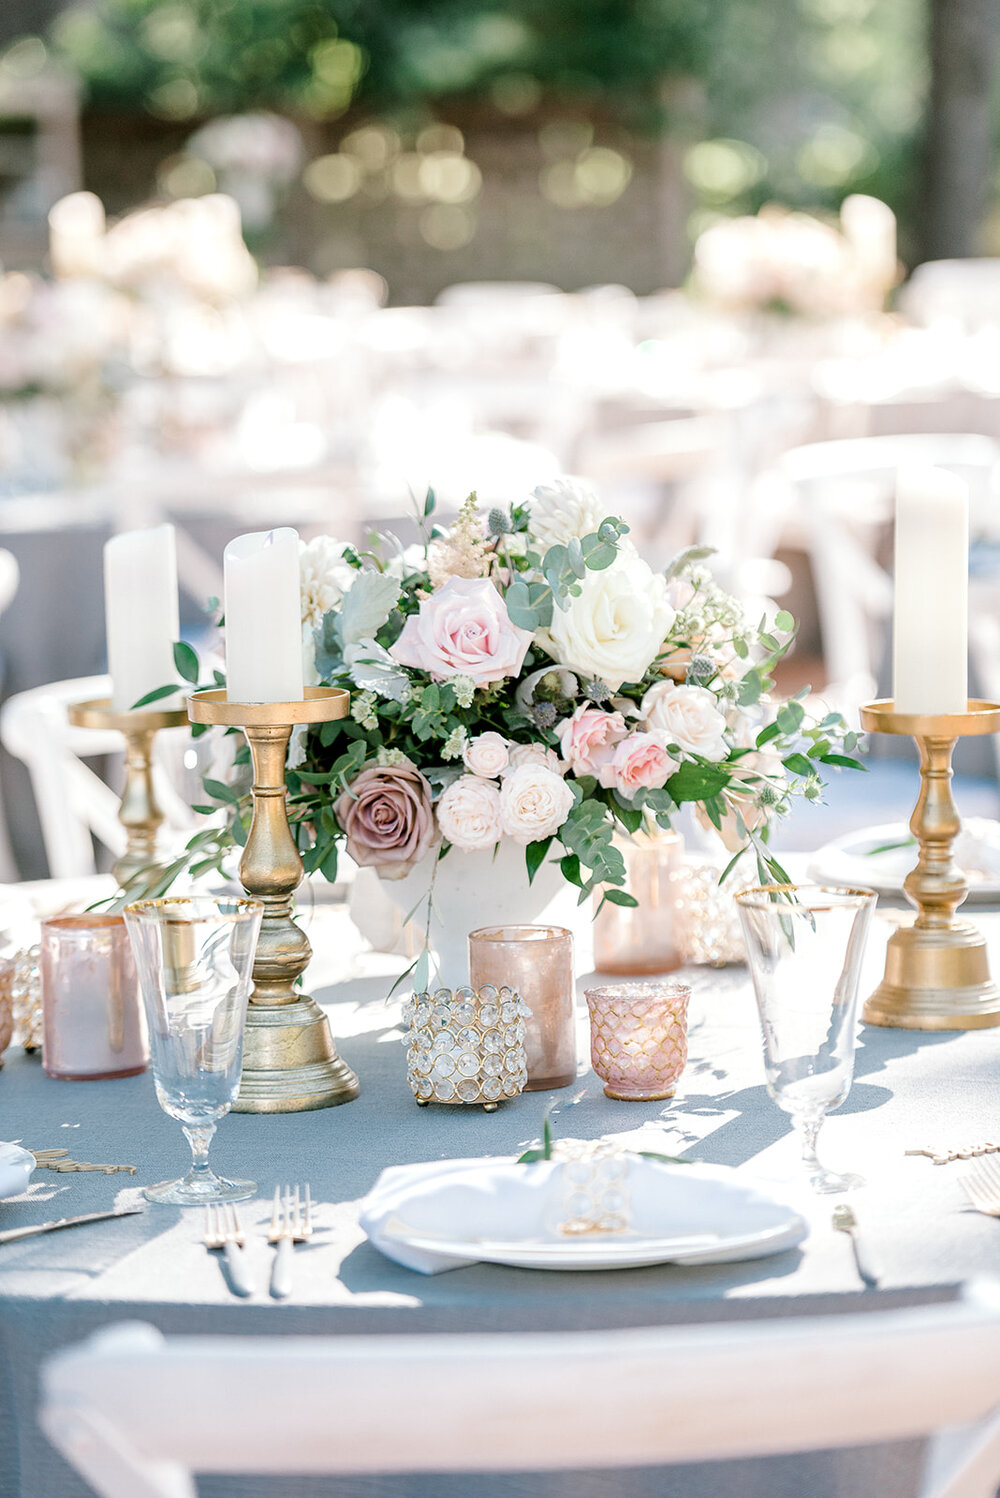 Violette-fleurs-roseville-napa-california-luxury-florist-silverado-resort-and-spa- weddings-by-scott-and-dana-centerpiece-white-vase-mauve0.jpg